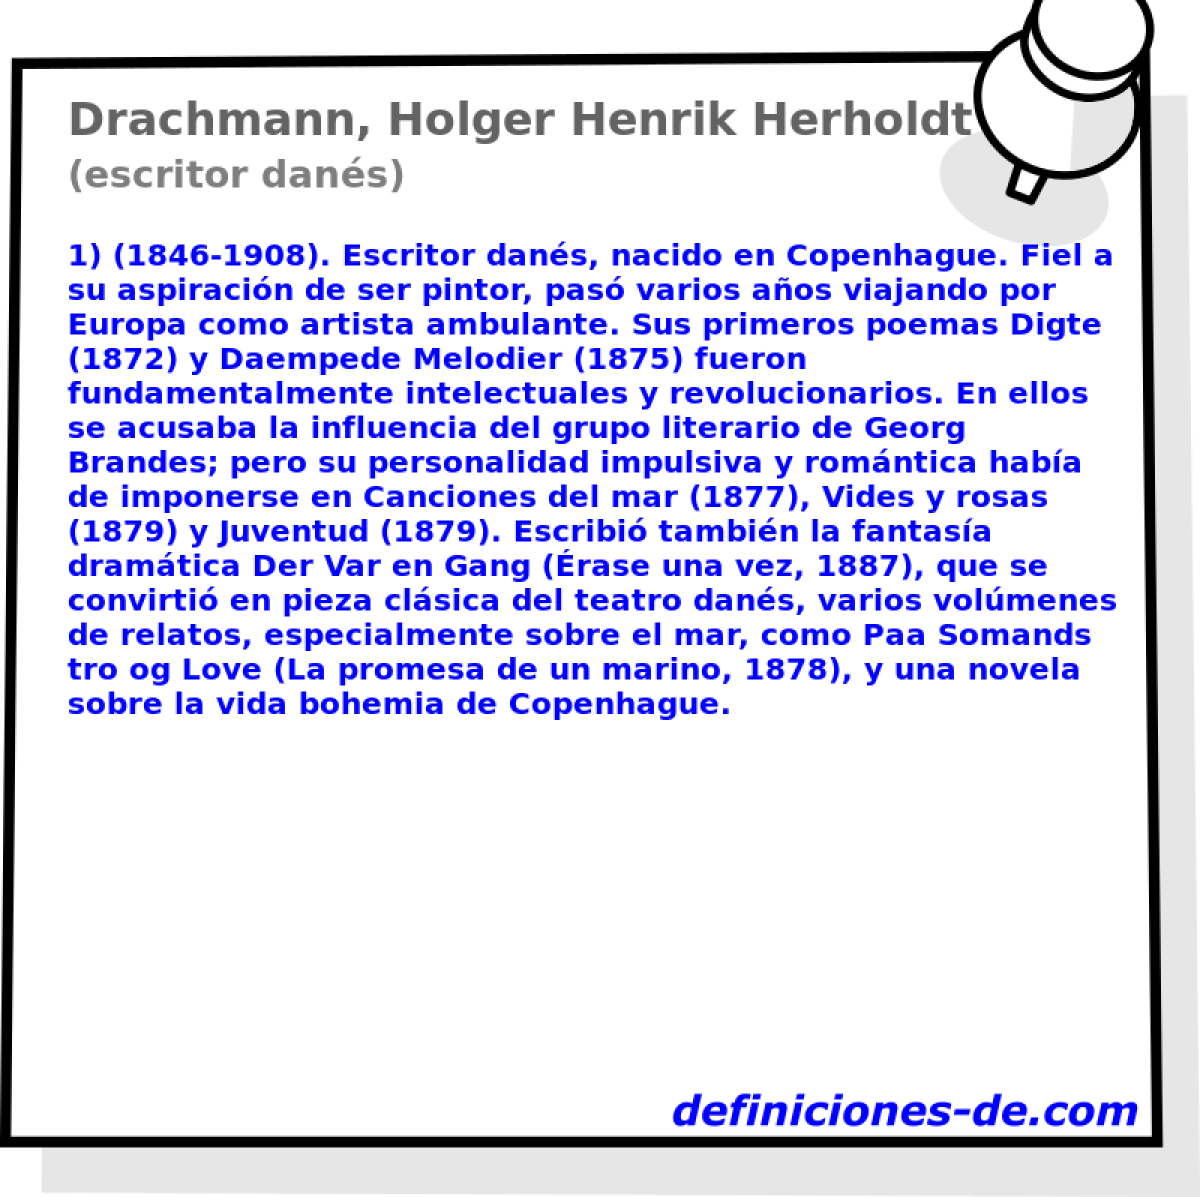 Drachmann, Holger Henrik Herholdt (escritor dans)